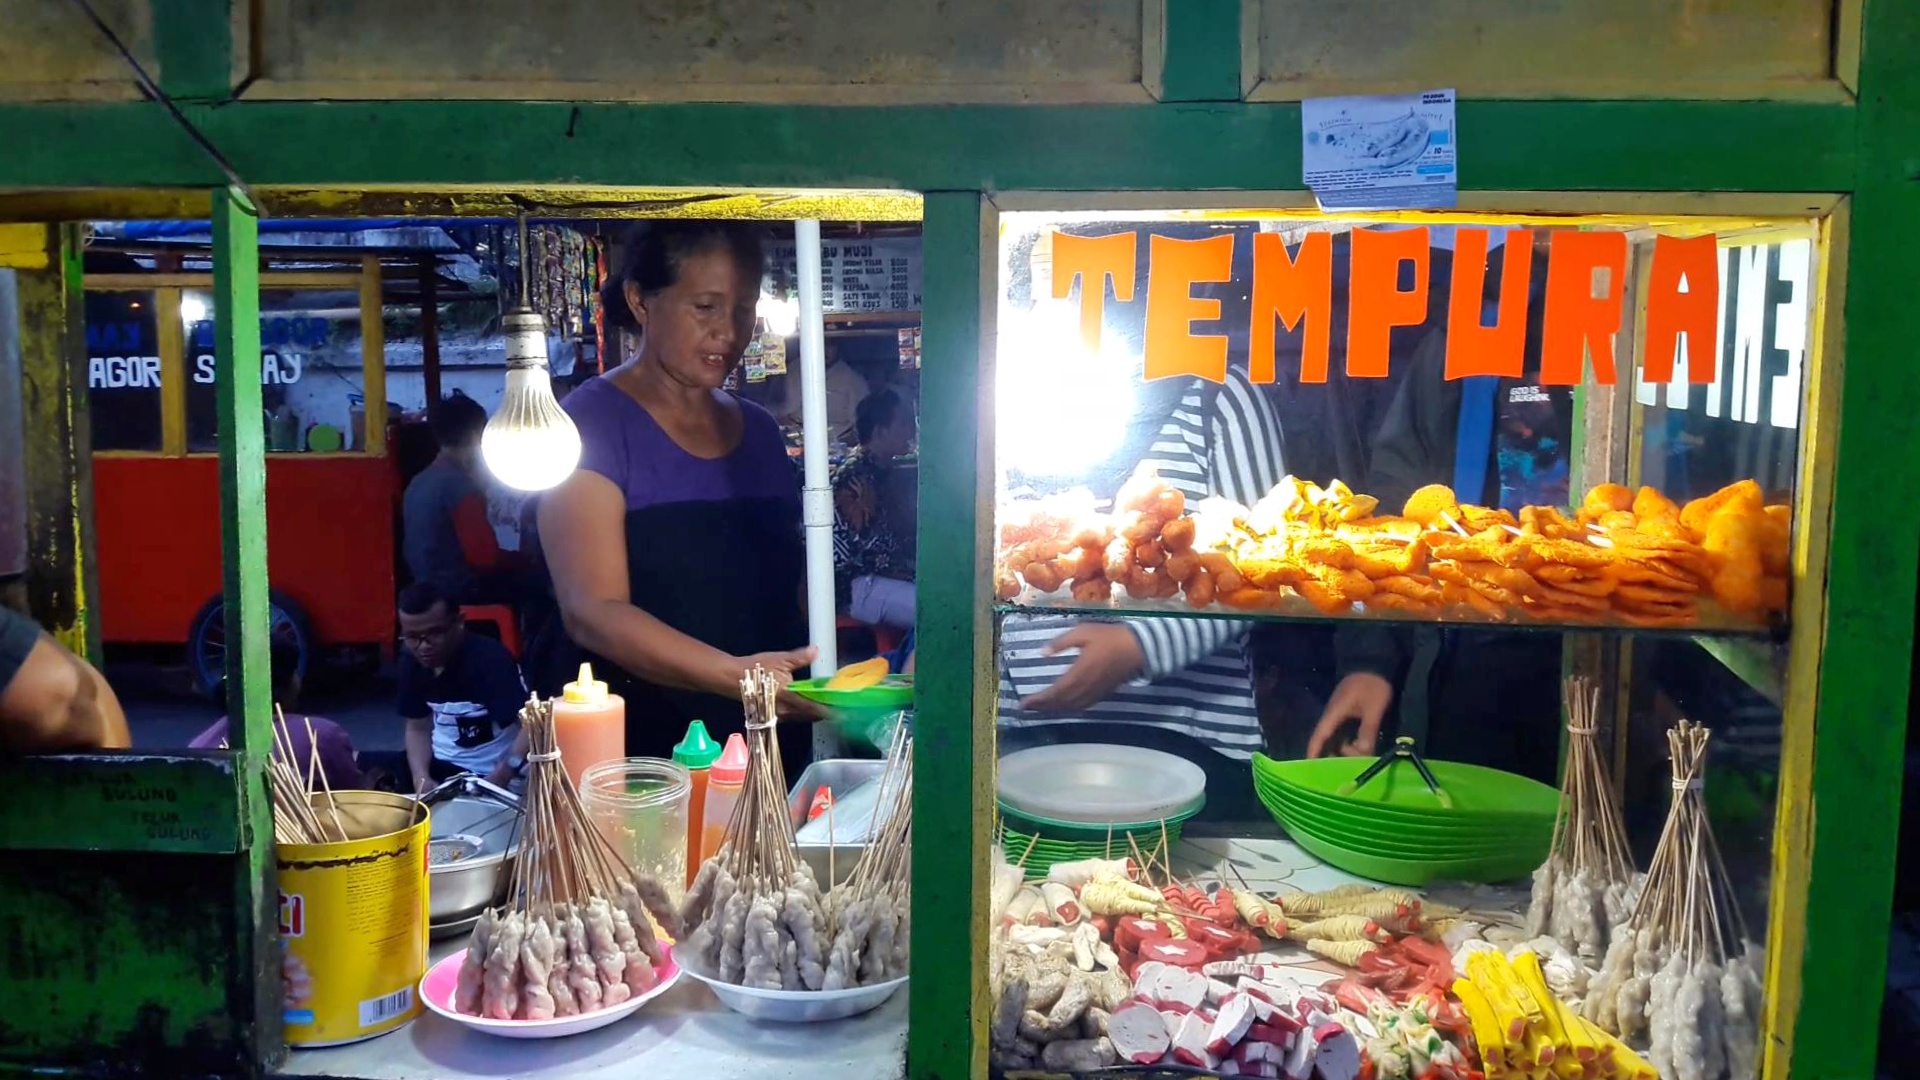 Gerobak tempura Alkid via Annissa Saputri